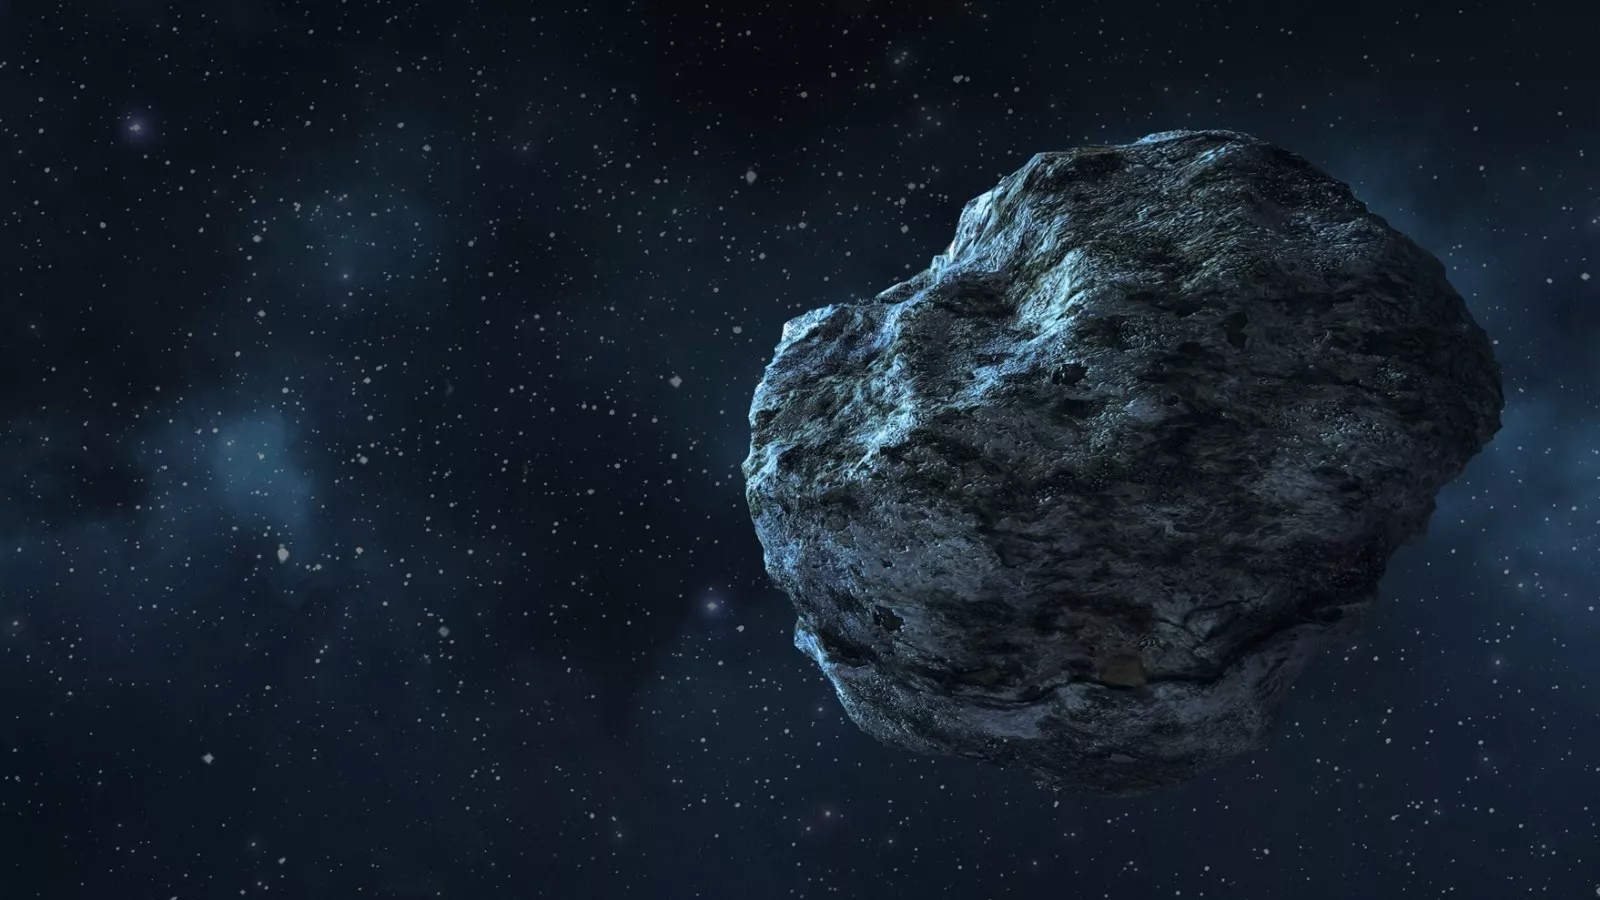 https://d.newsweek.com/en/full/2029736/asteroid.webp?w=1600&h=900&q=88&f=87922c5b58c0085944cda0a5cd606166